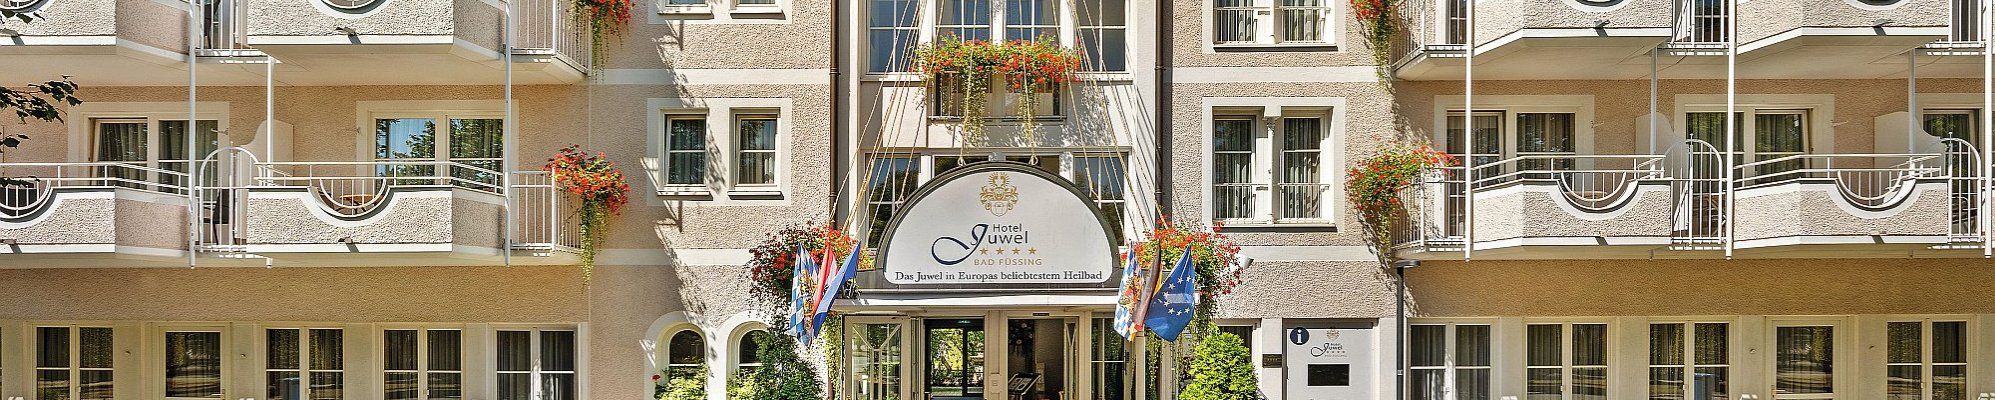 Hotel Juwel I Kururlaub Bad Füssing mit Haustürabholung